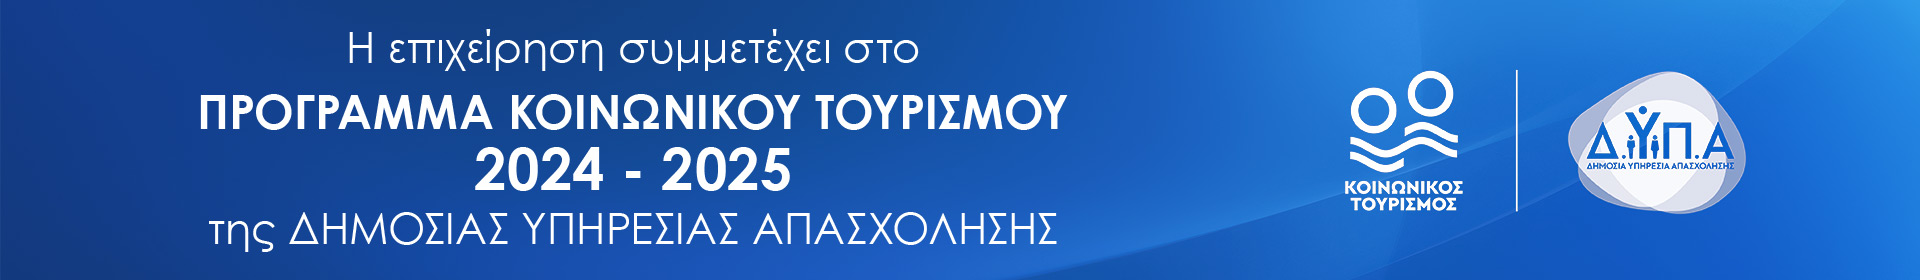 DYPA Koinonikos Tourismos Banner Desktop